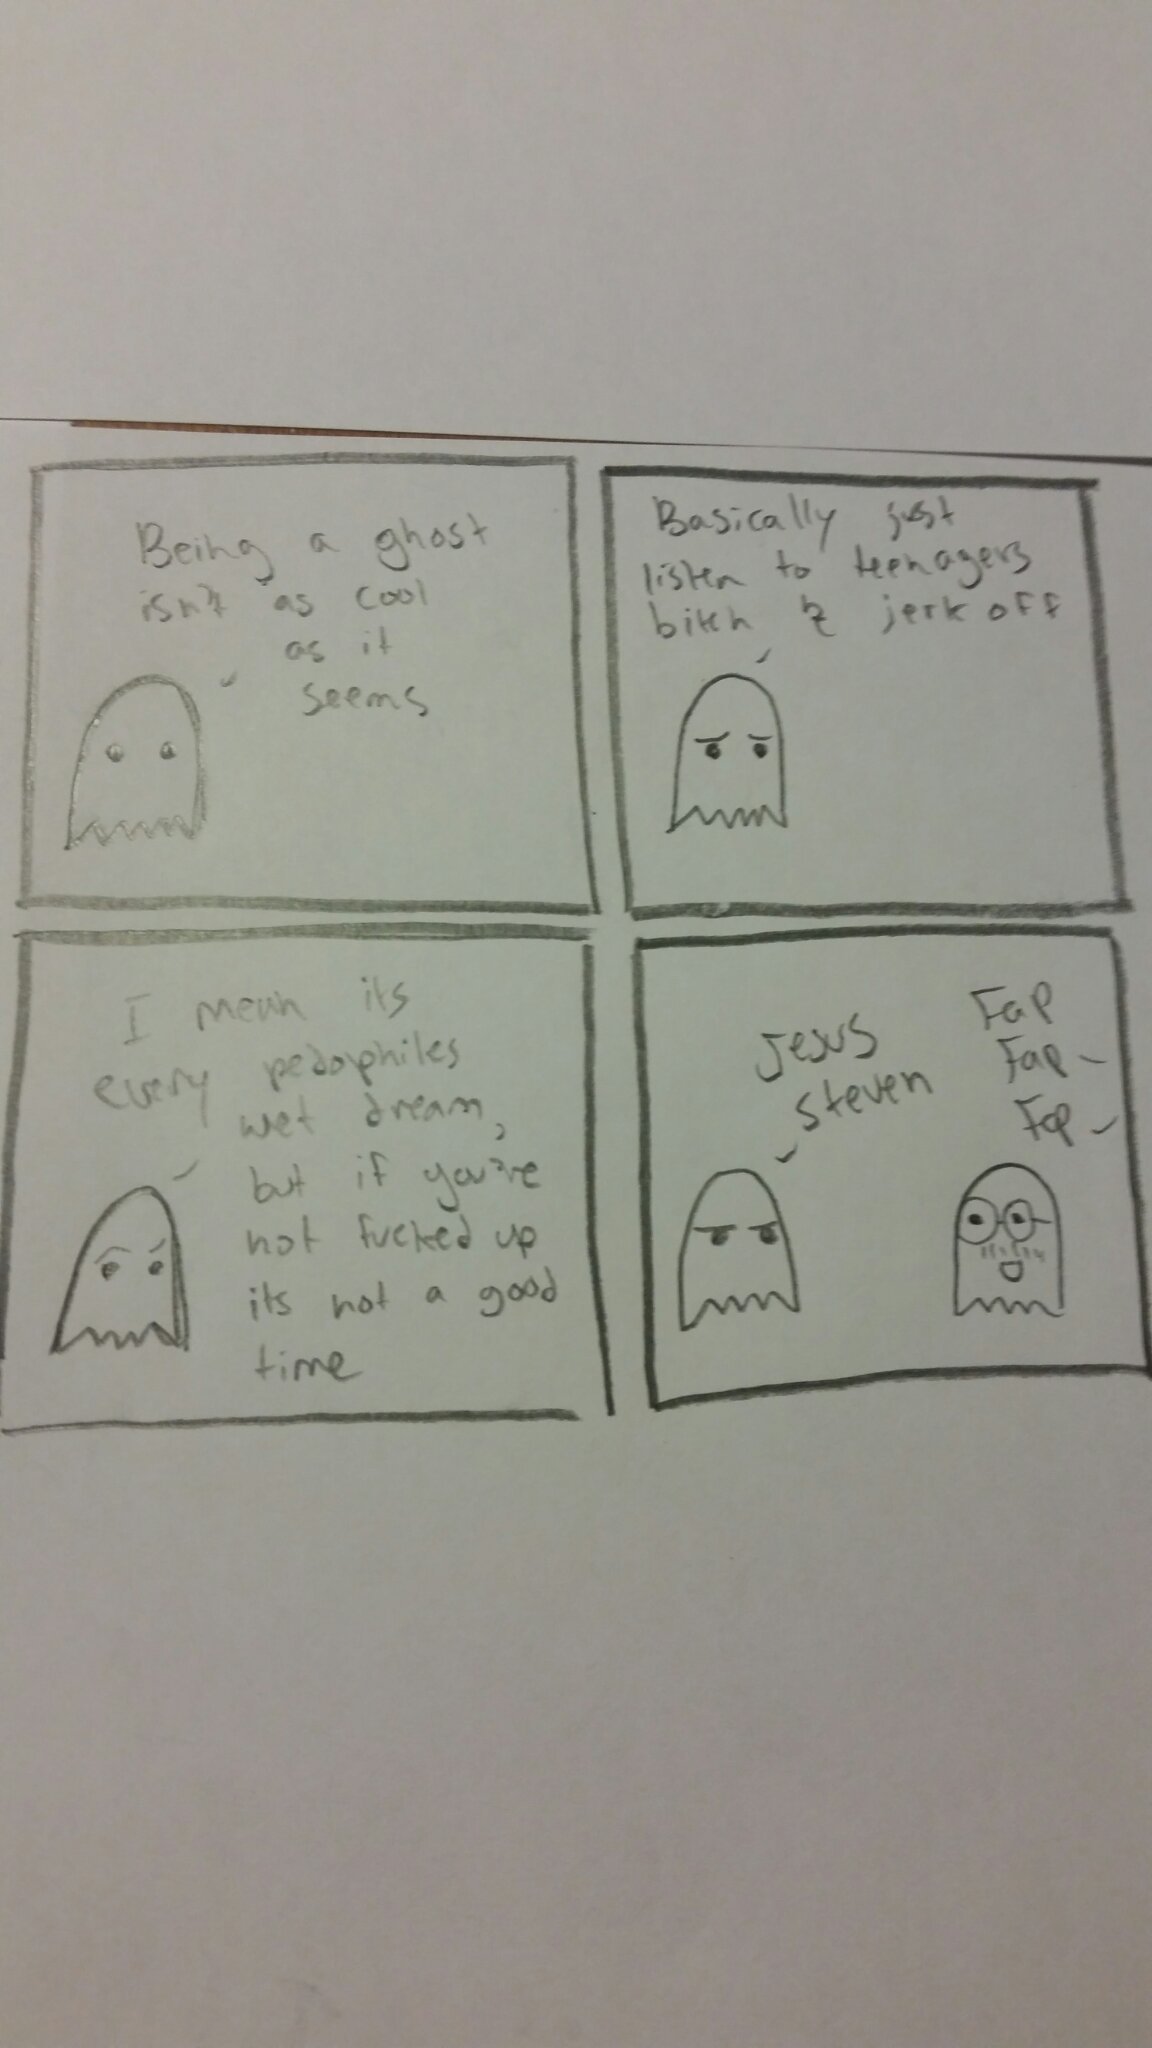 Ghost comics thumbs up if you want me to make more via computer - meme